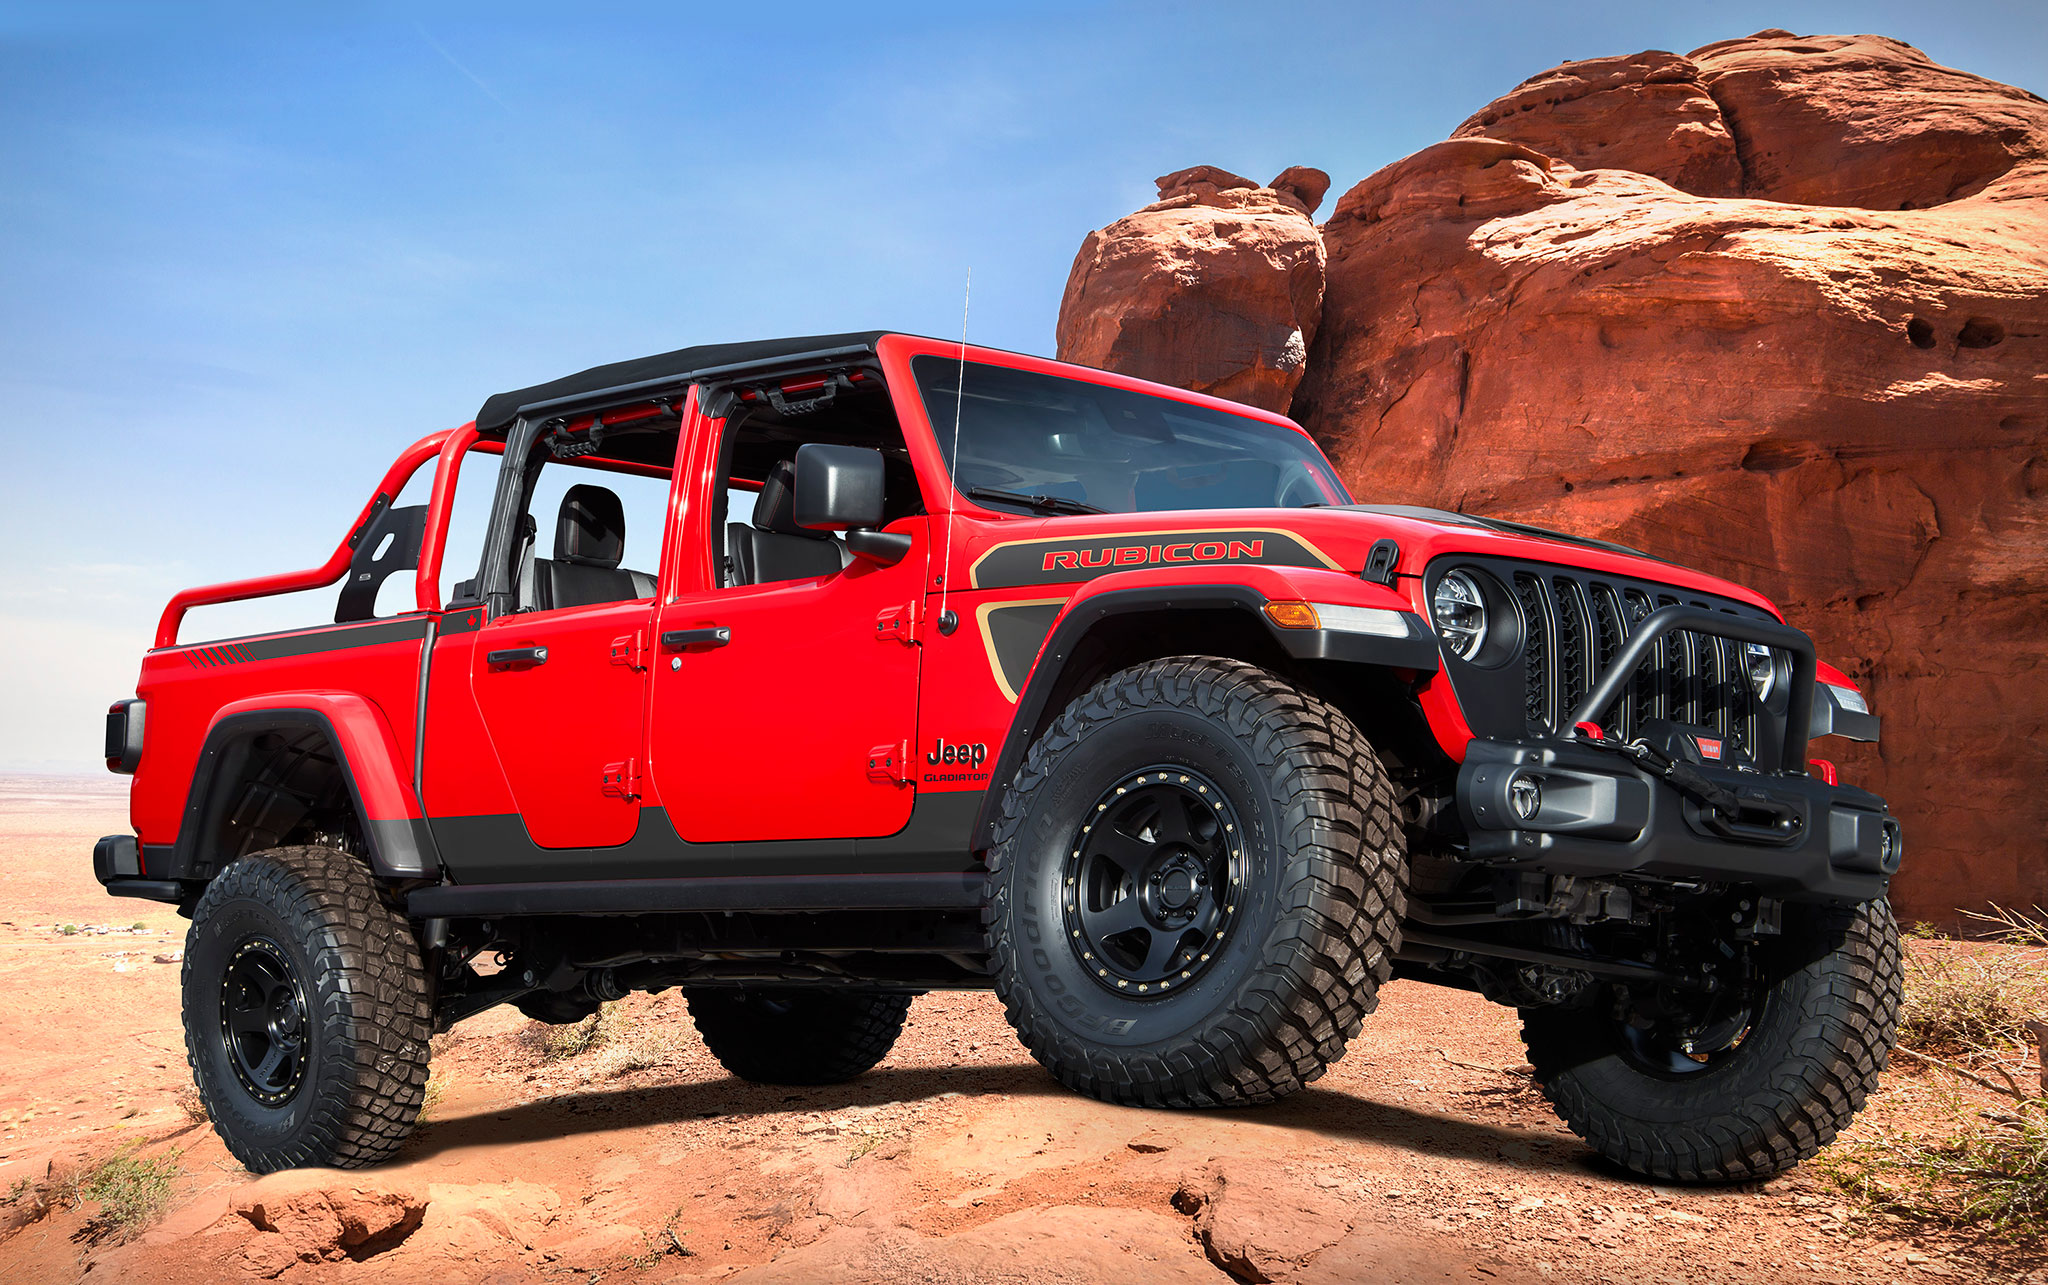 2021 Jeep Red Bare Gladiator Rubicon Concept trois quarts avant droit - Concept Cars de Jeep®.